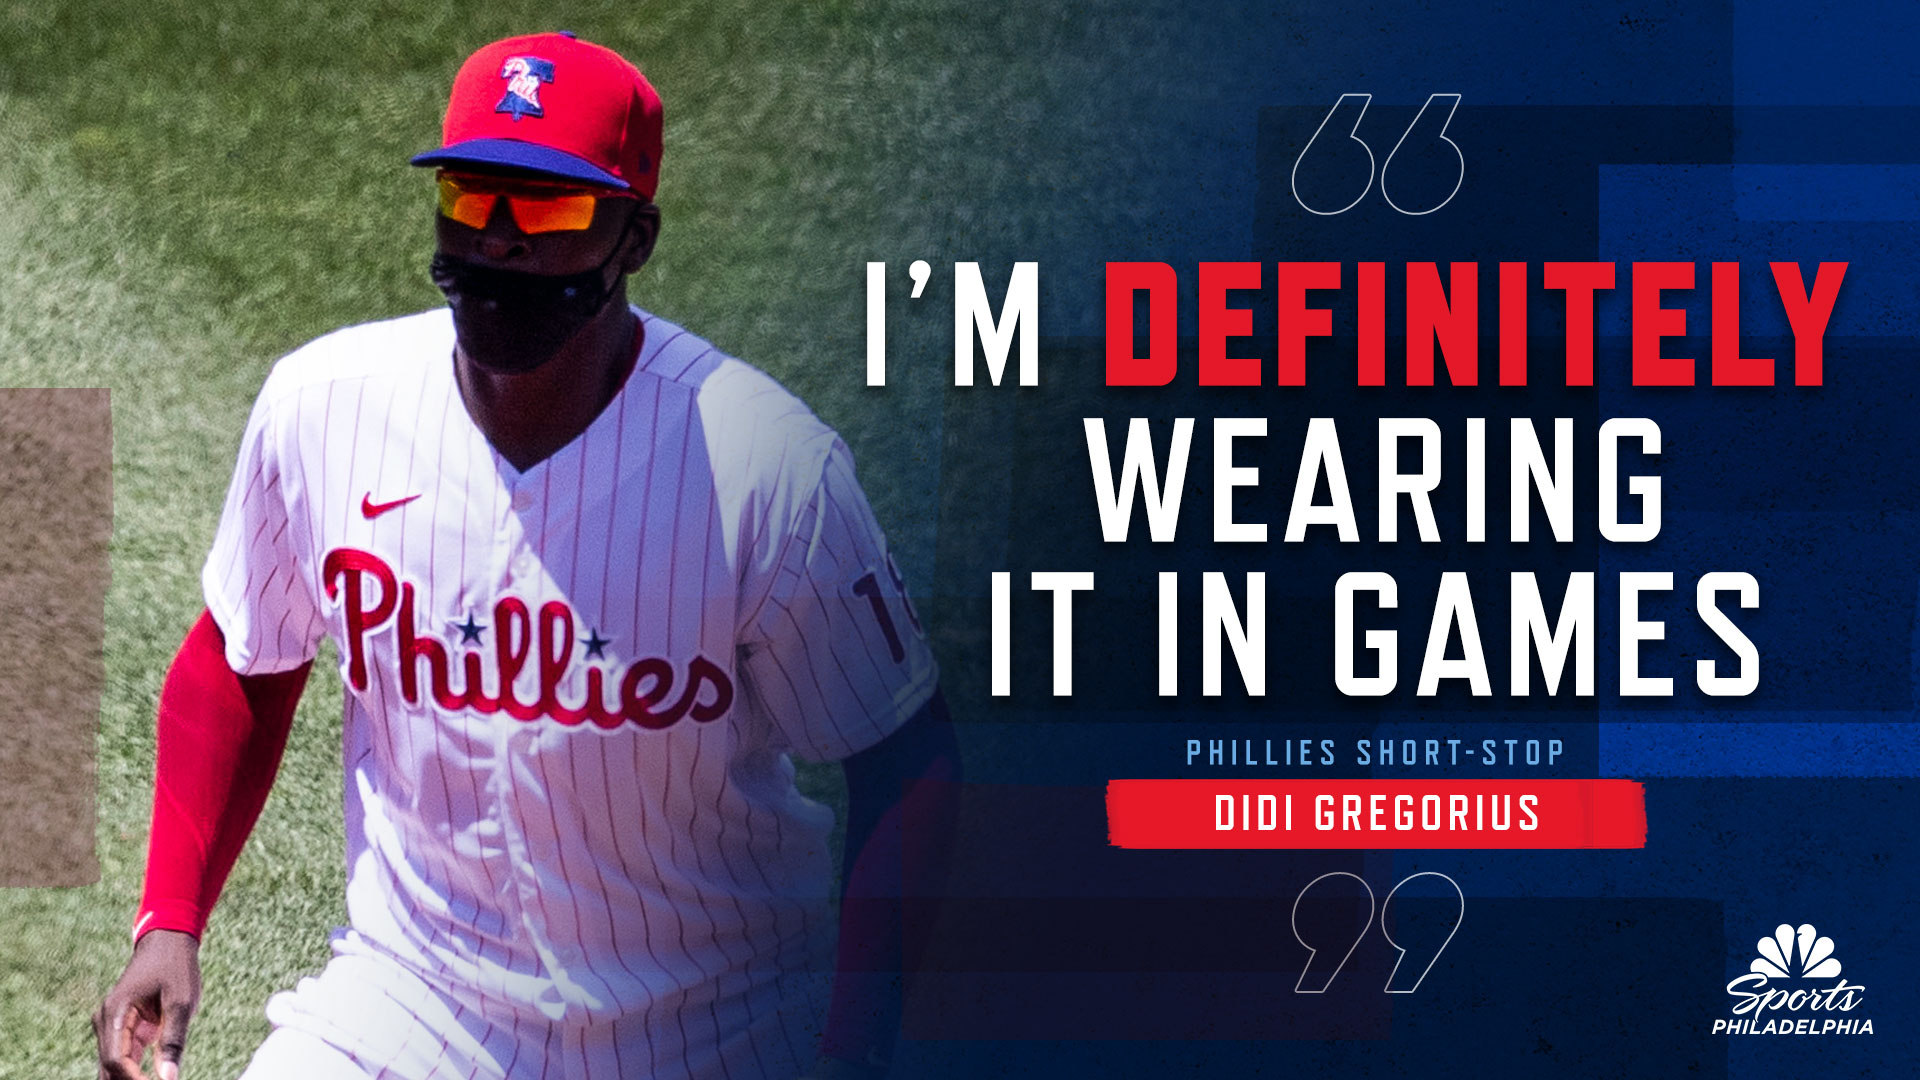 Philadelphia Phillies sign Didi Gregorius to 1-year contract